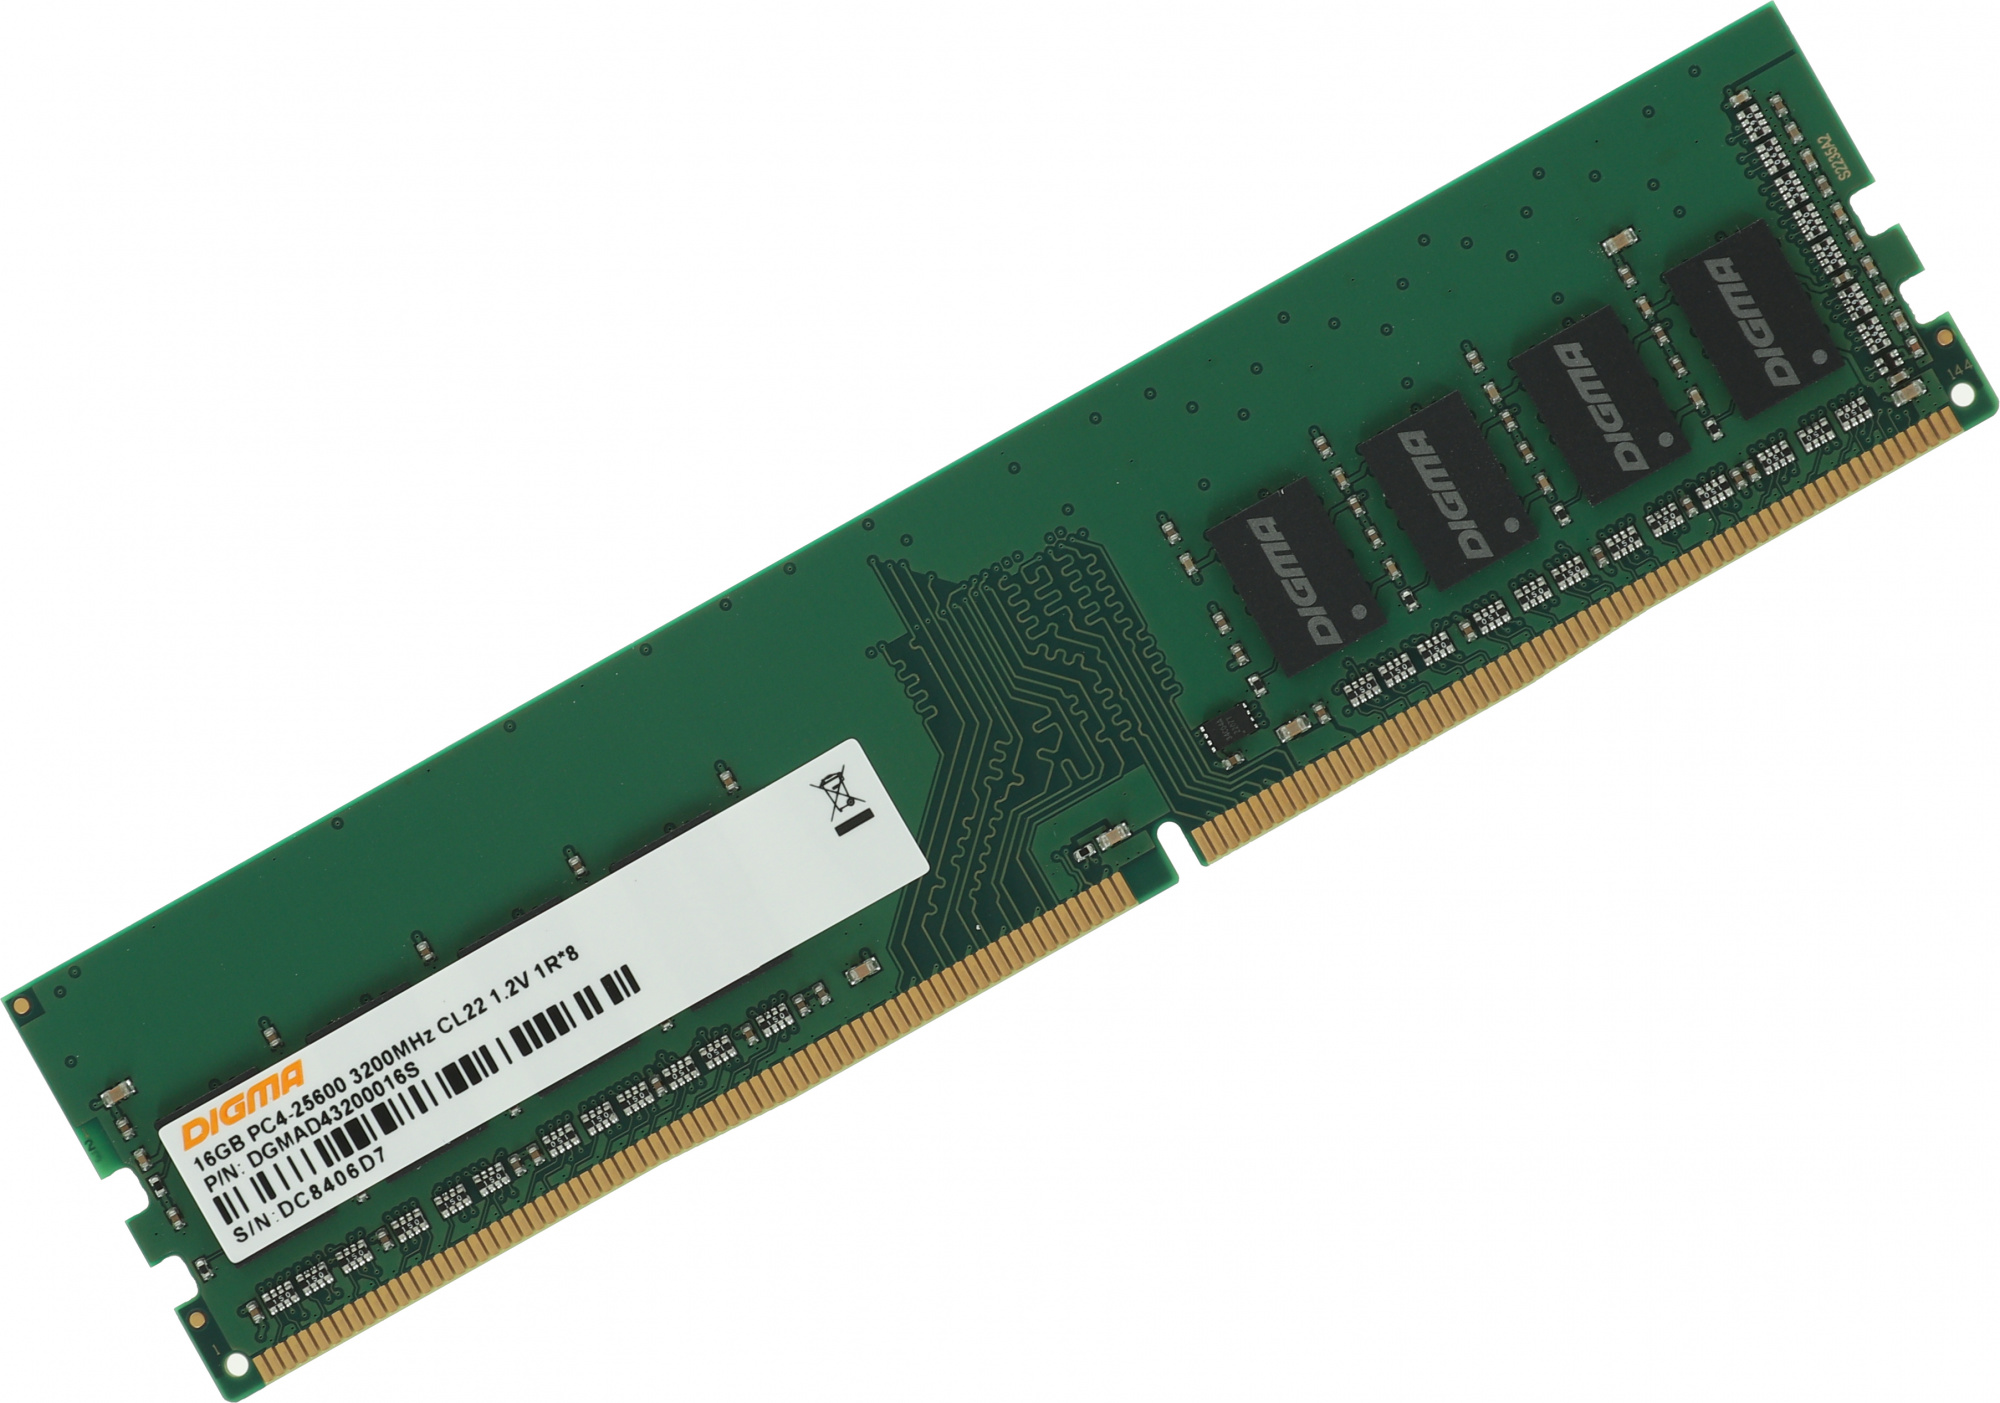 Модуль памяти Digma DGMAD42666016S DDR4 - 16ГБ 2666, DIMM, Ret